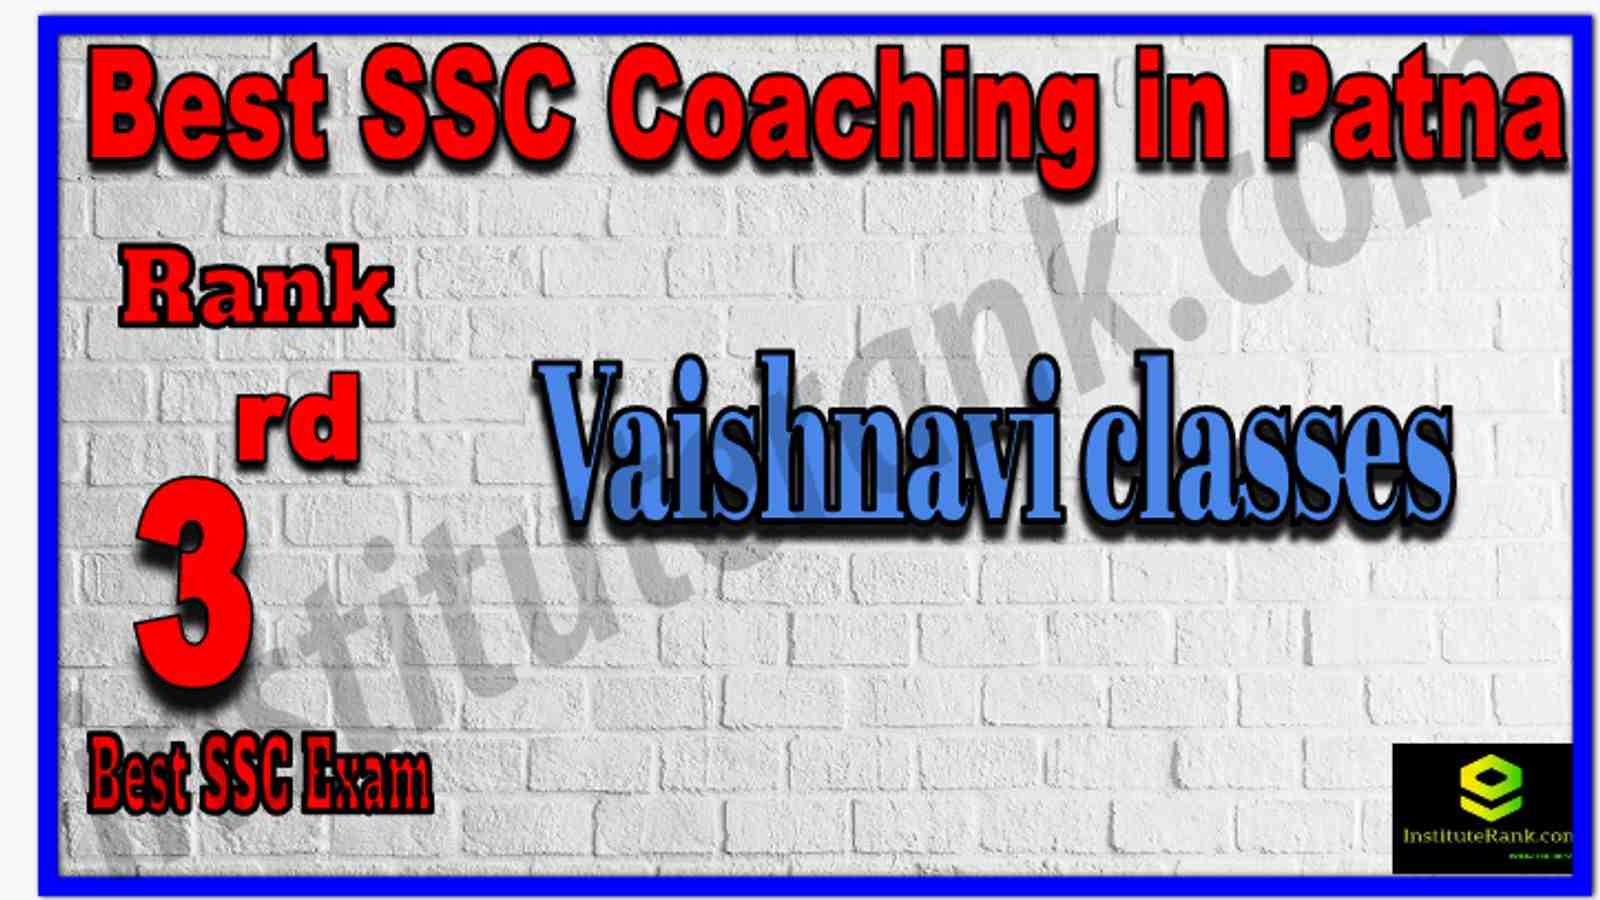 Rank 3rd Best SSC Coaching in Patna